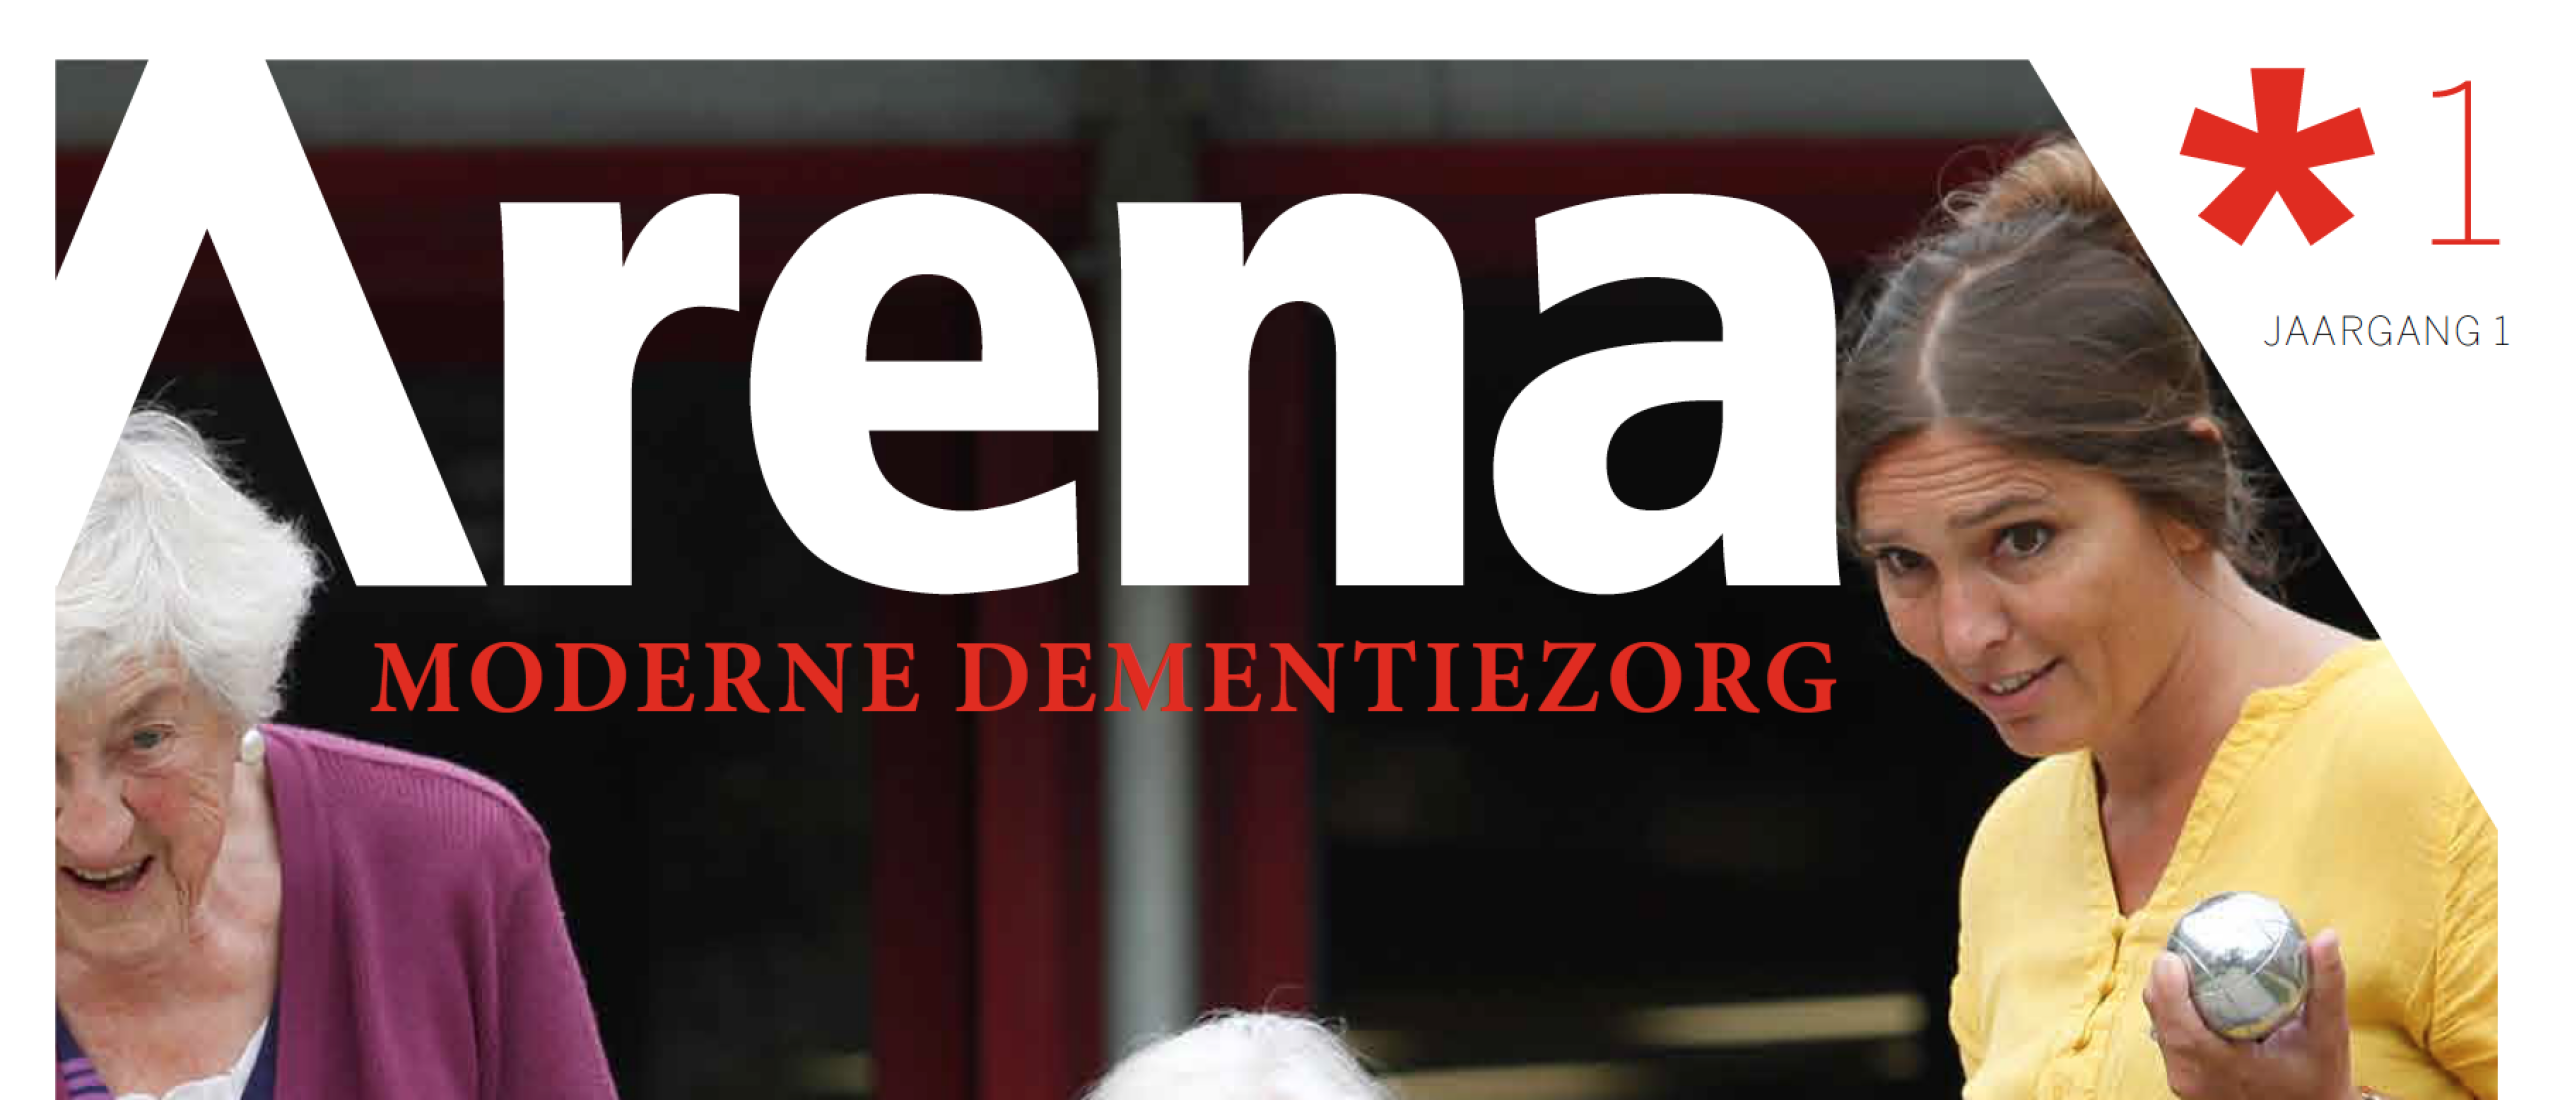 Arena magazine 1 - StudieArena